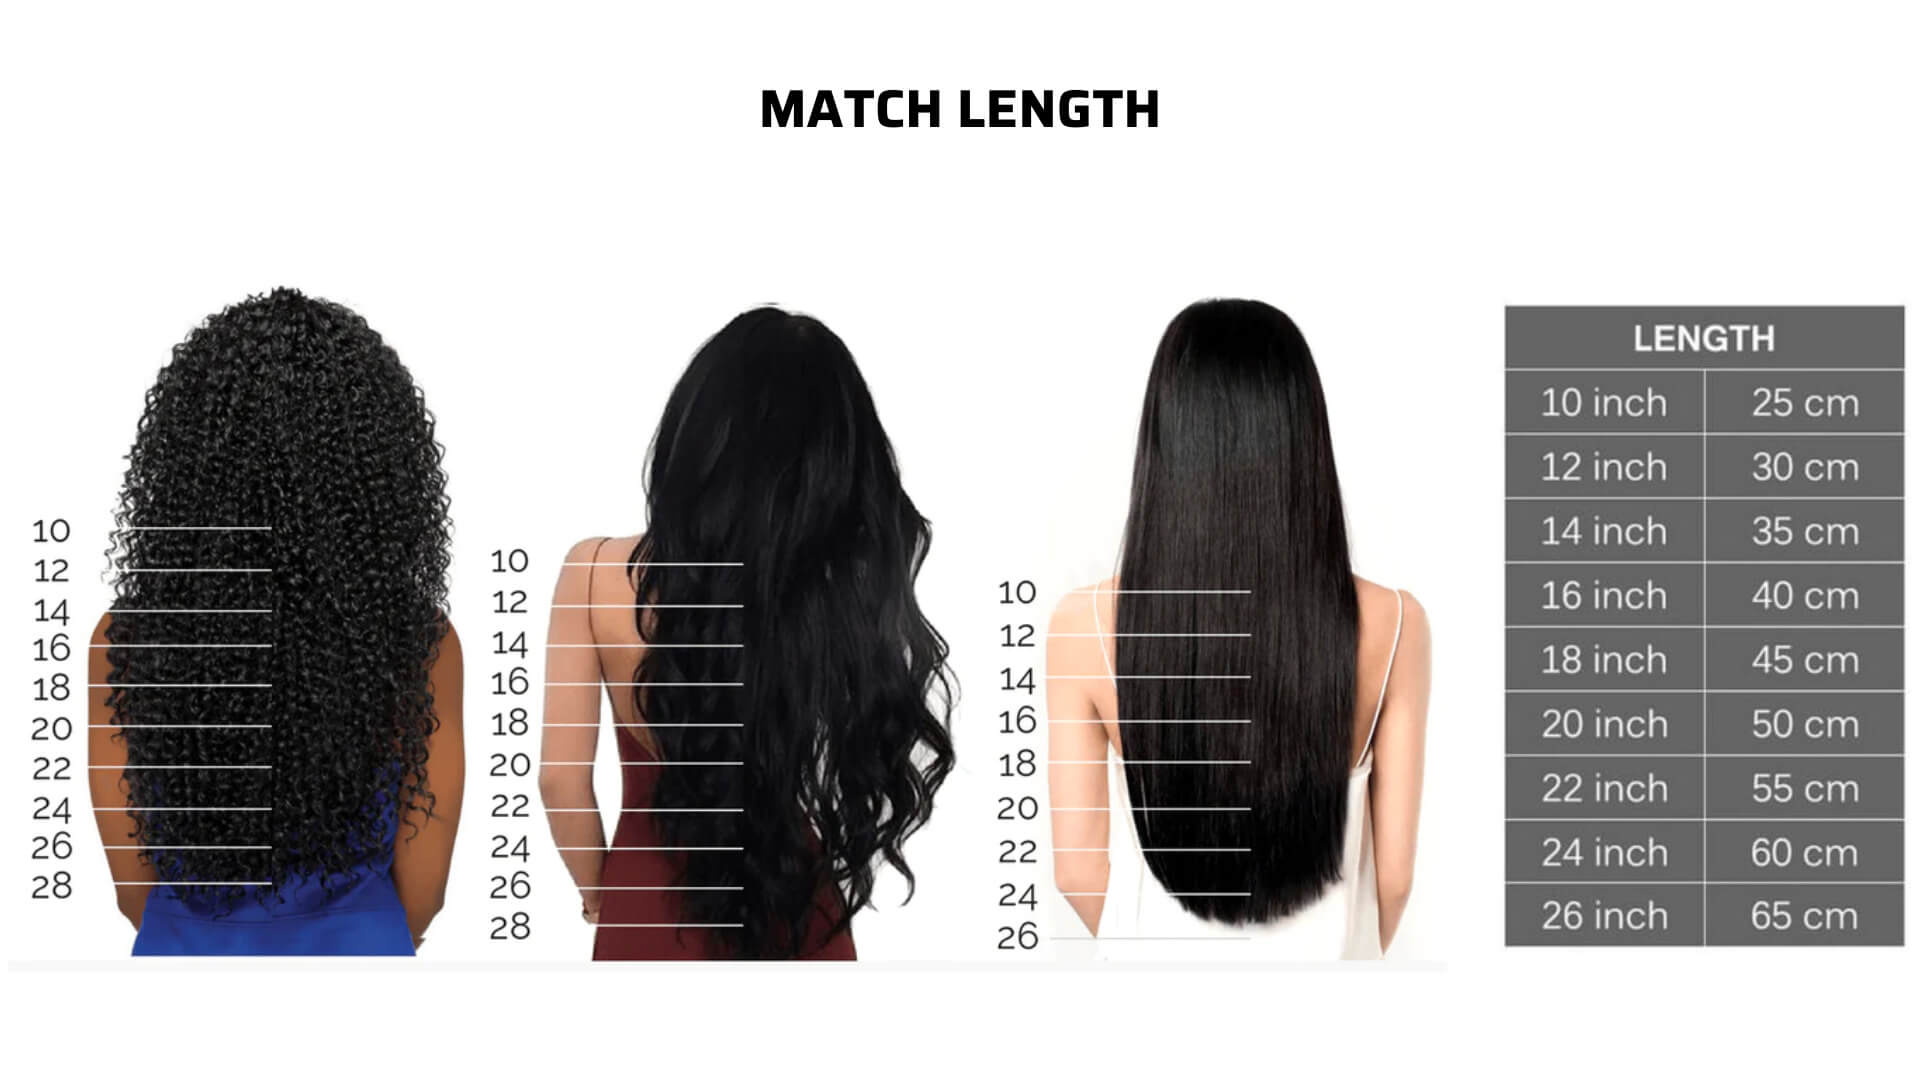 Match length